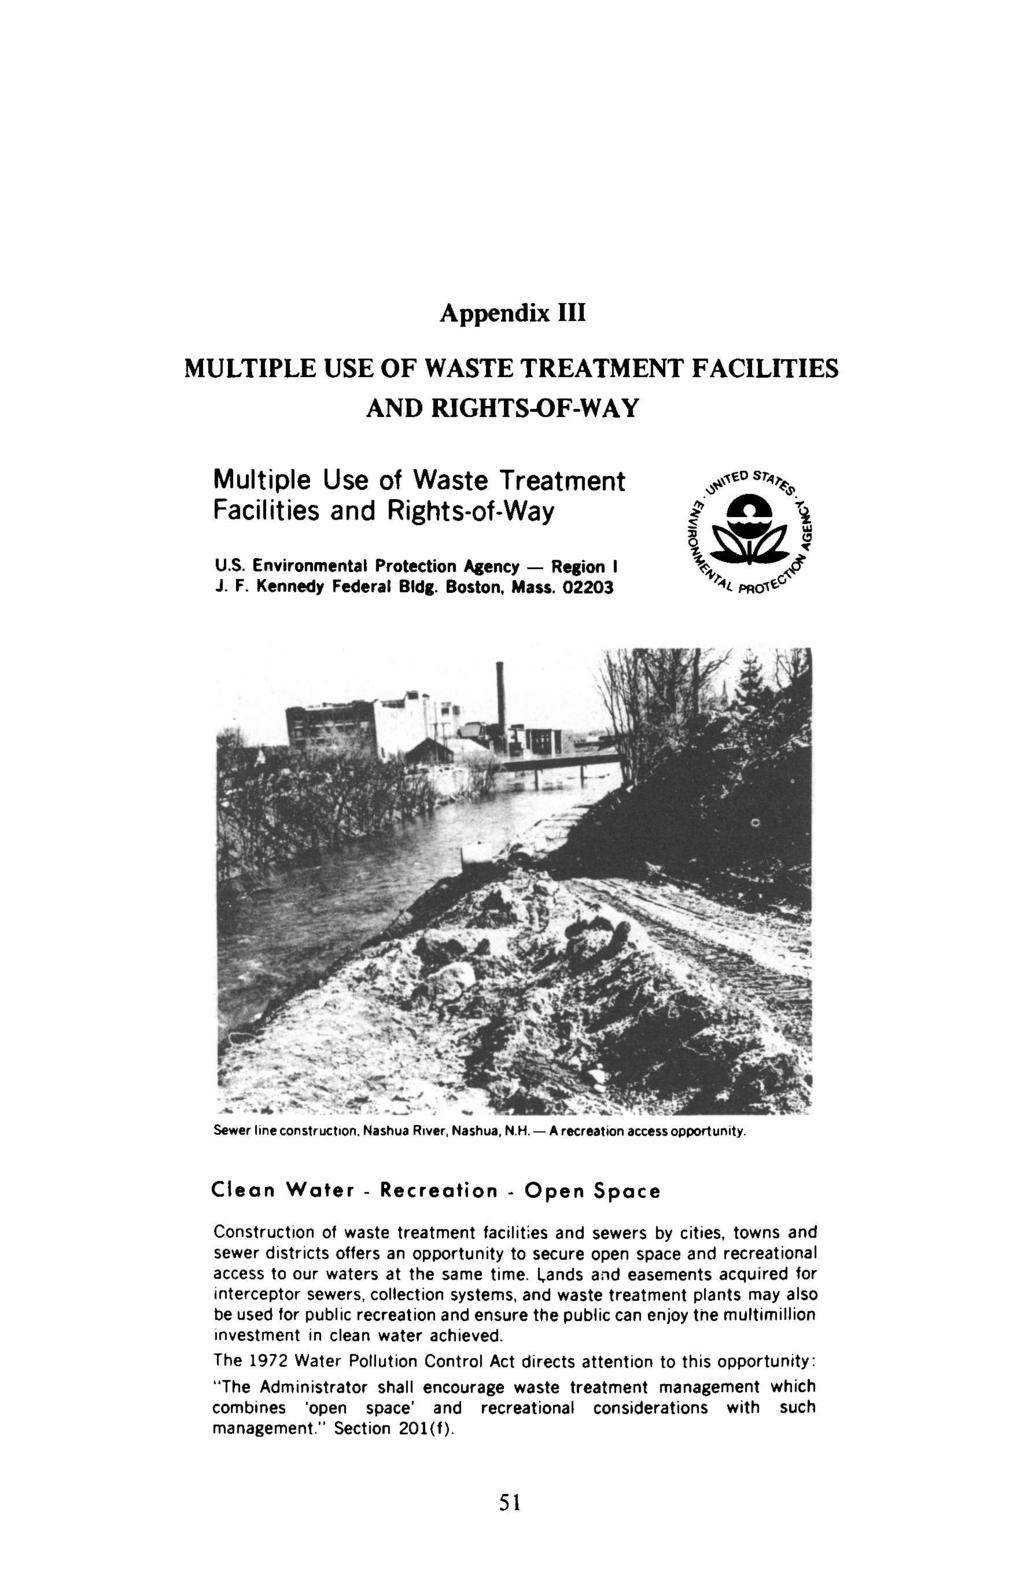 Appendix III MULTIPLE USE OF WASTE TREATMENT FAILITIES AND RIGHTS-OF-WAY Multiple Use of Waste Treatment Facilities and Rights-of-Way /**r4 / E U.S. Environmental Protection Agency - Region I J. F. Kennedy Federal Bldg.